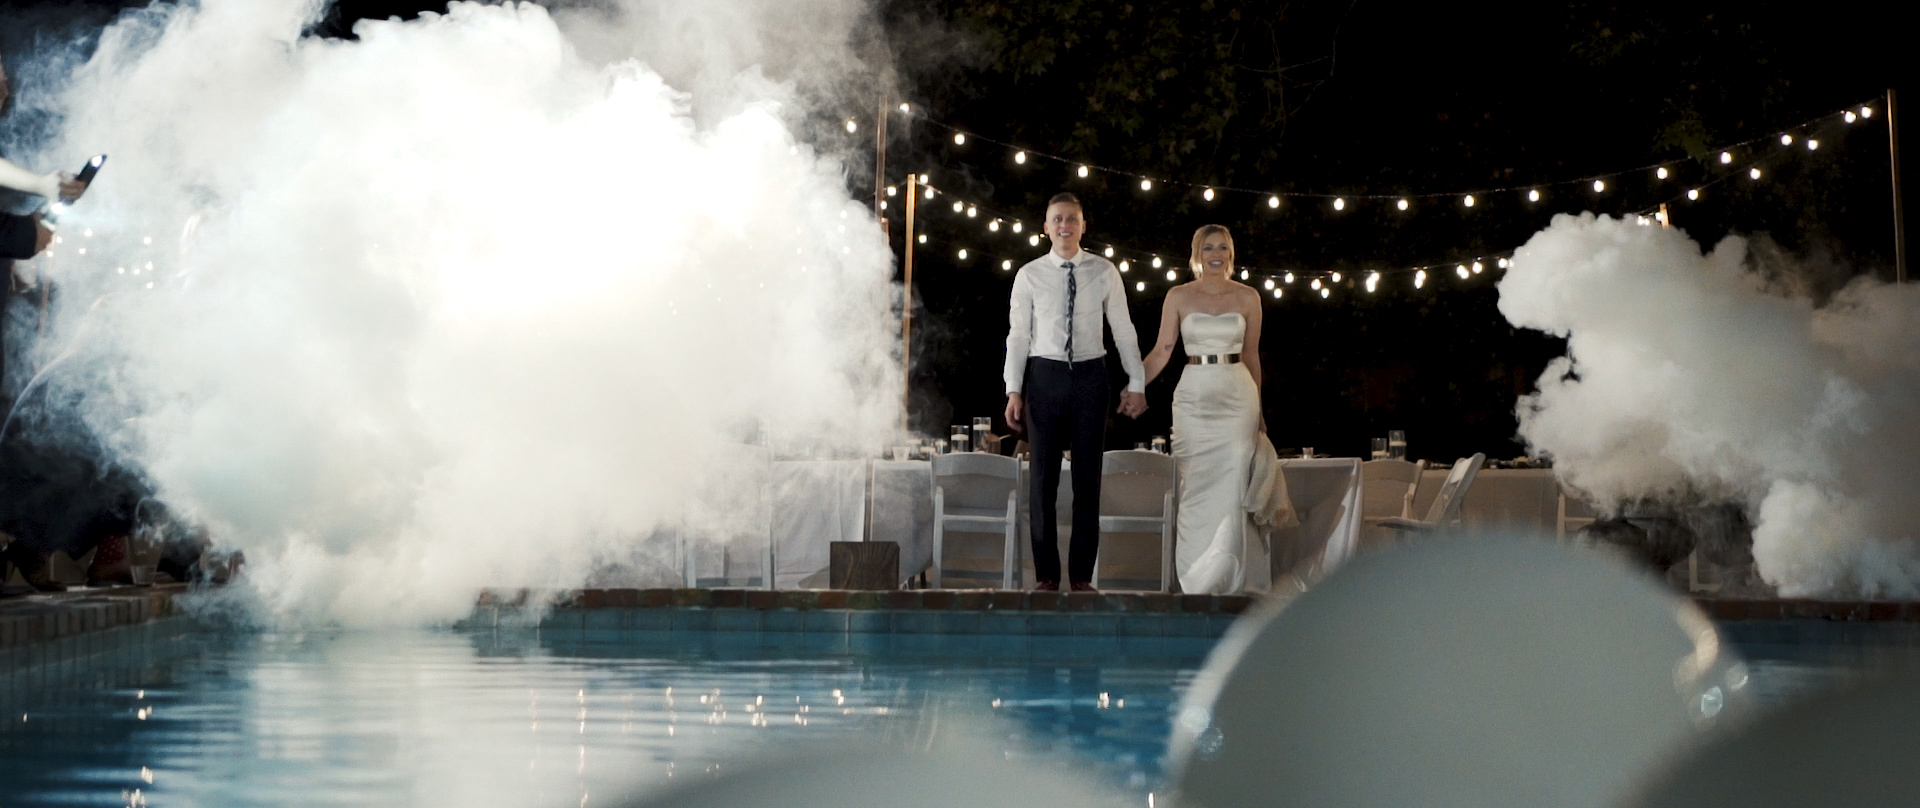 Pool Wedding Videography New Orleans.jpg